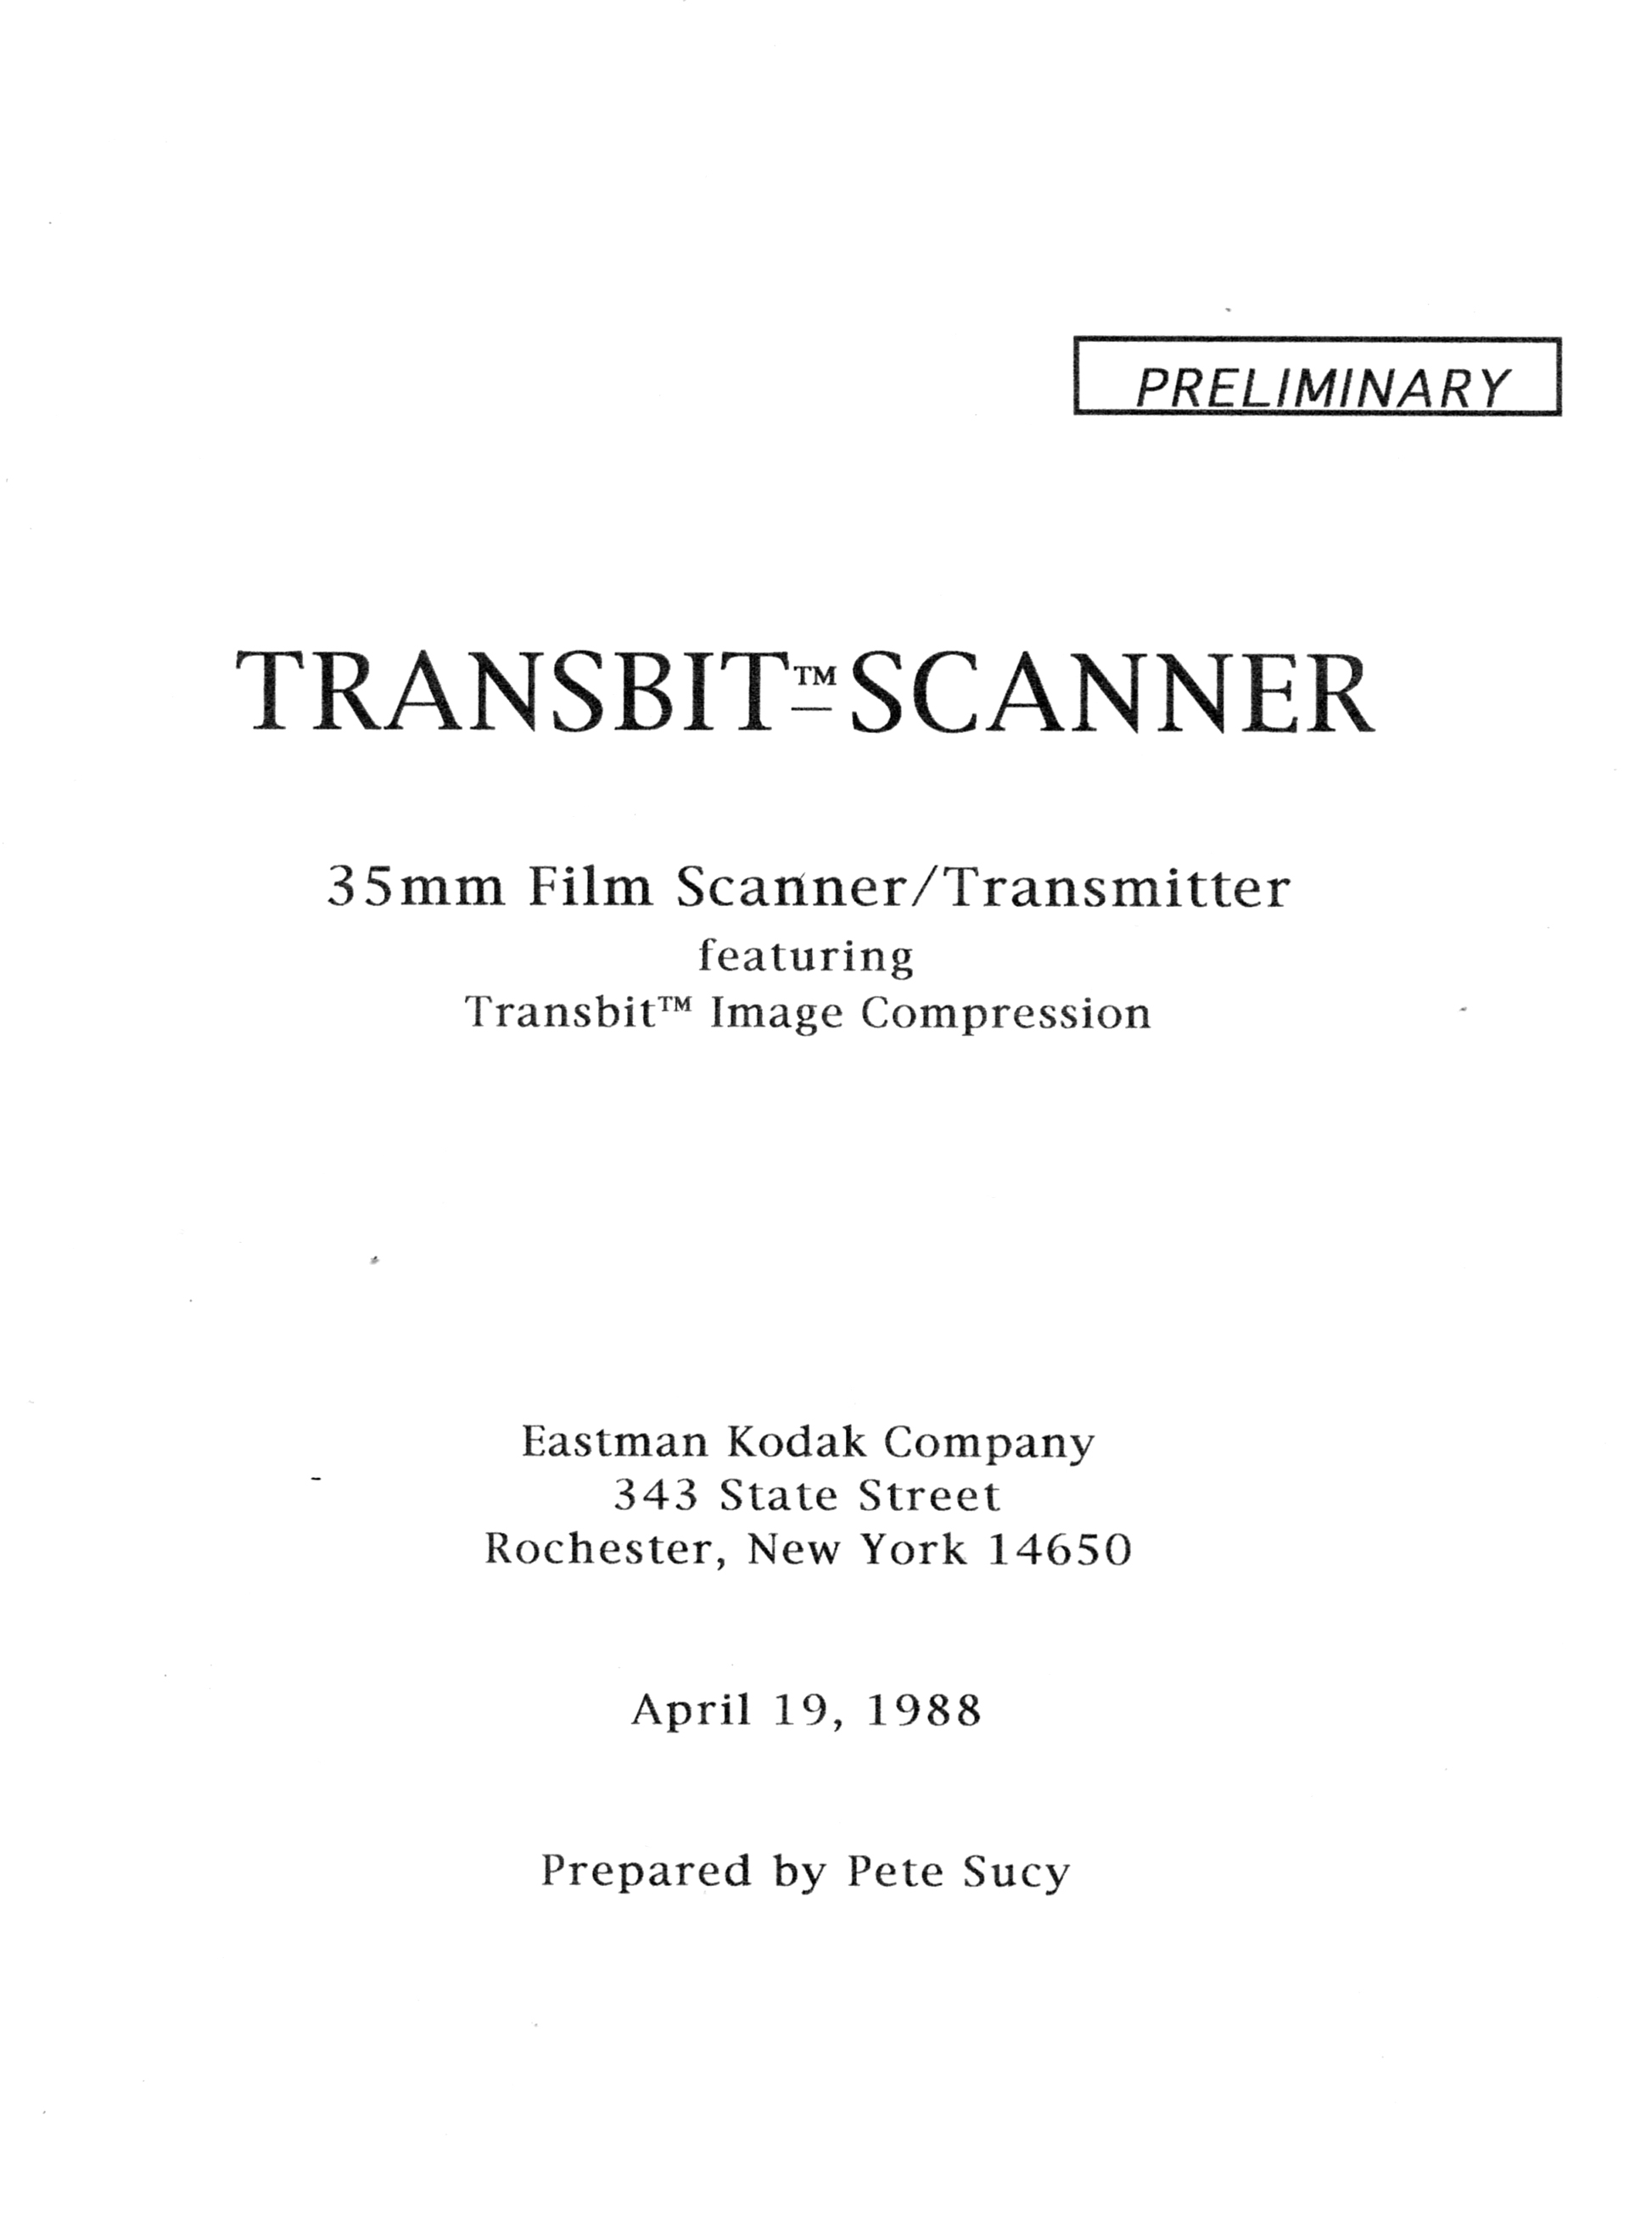 TransbitScanner